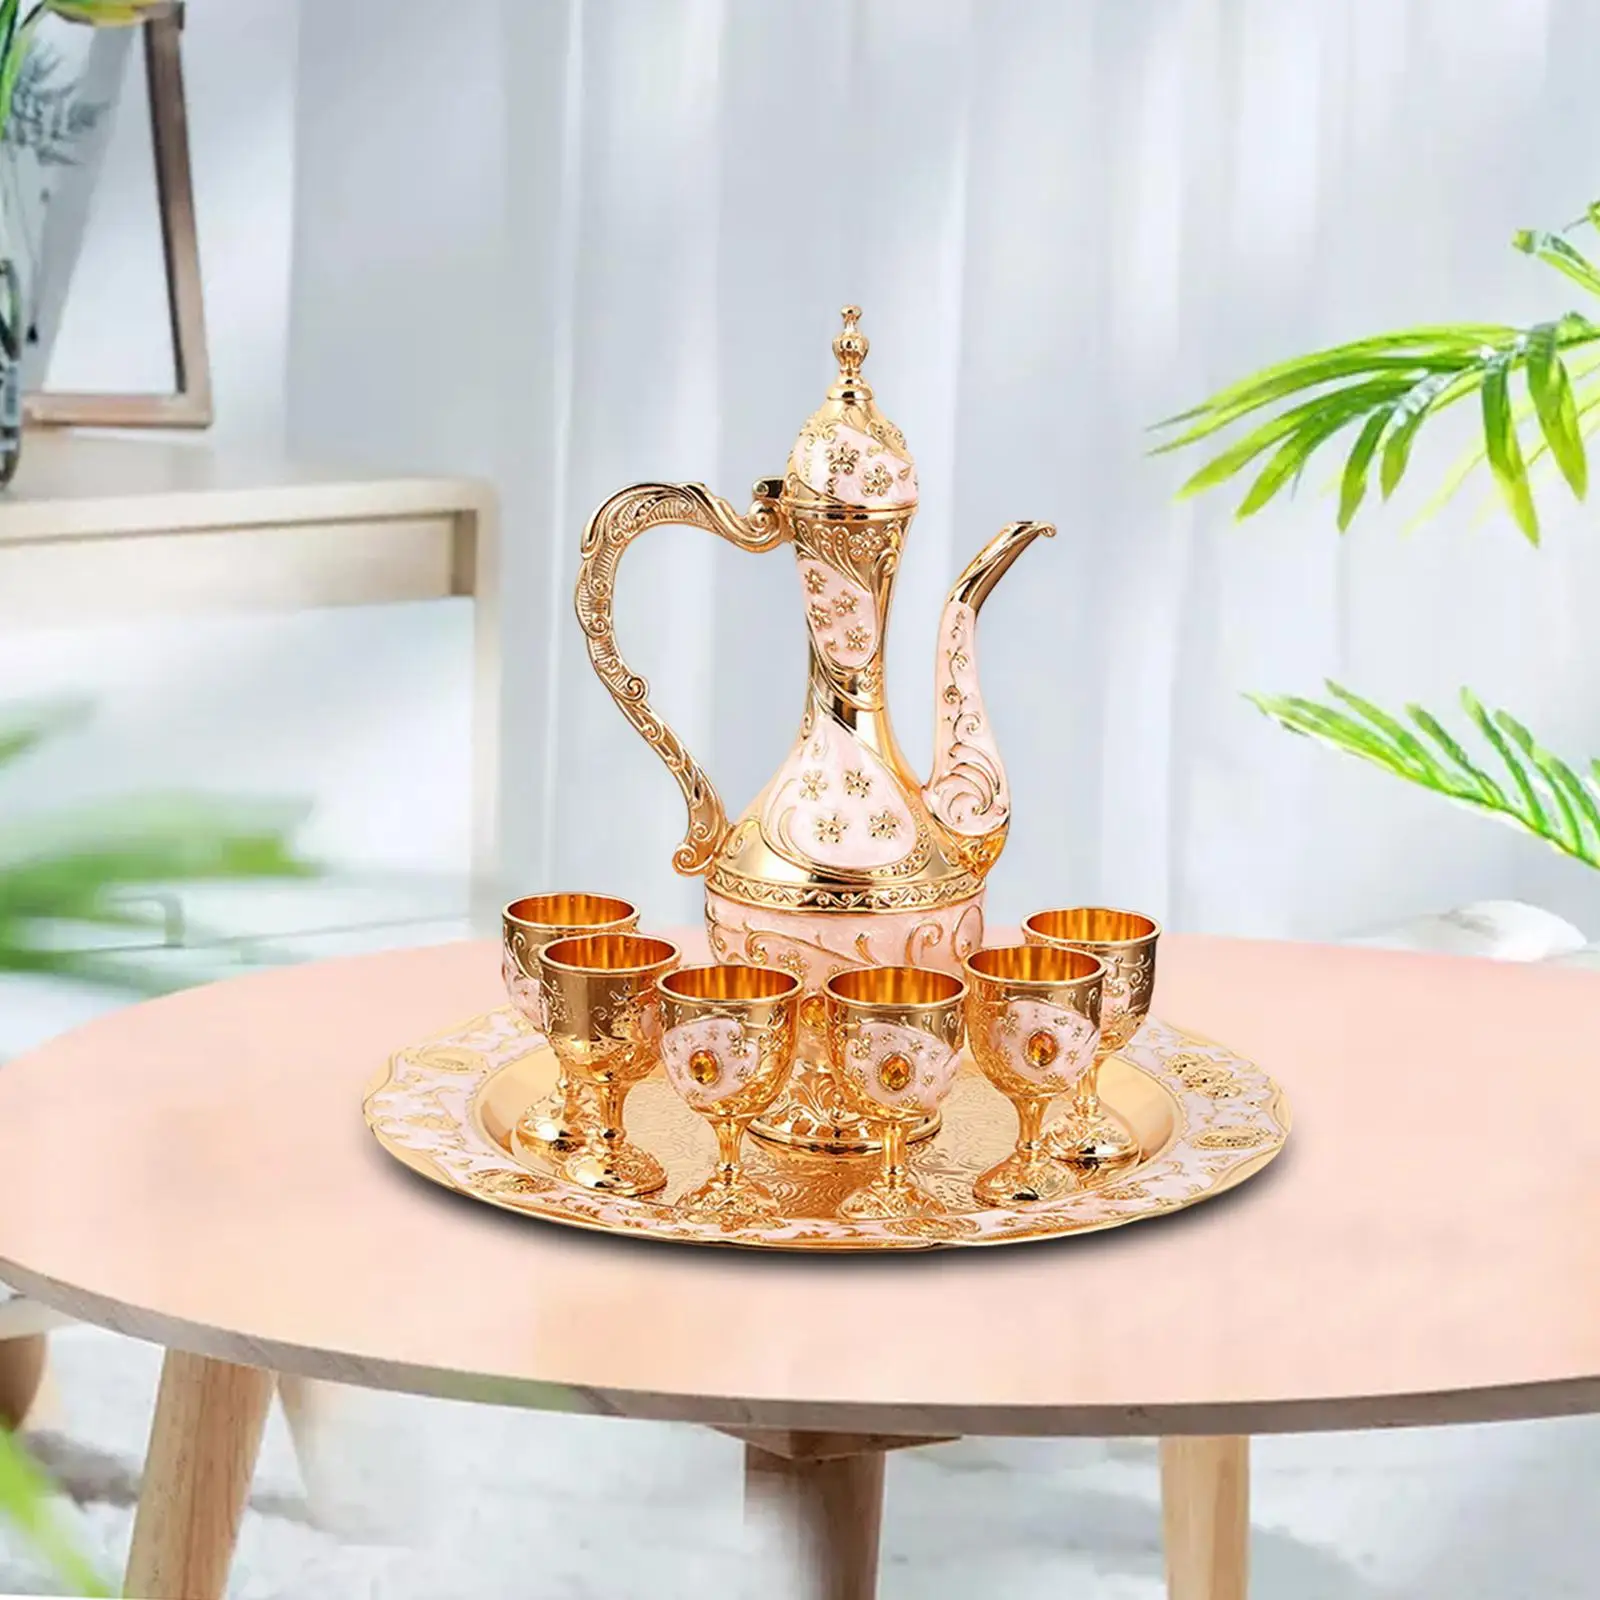 Luxury Tea Pot Set with Drinking Cups Beverage Serveware Tea Serving Set for Dining Room Holiday Bedroom Wedding Decoration